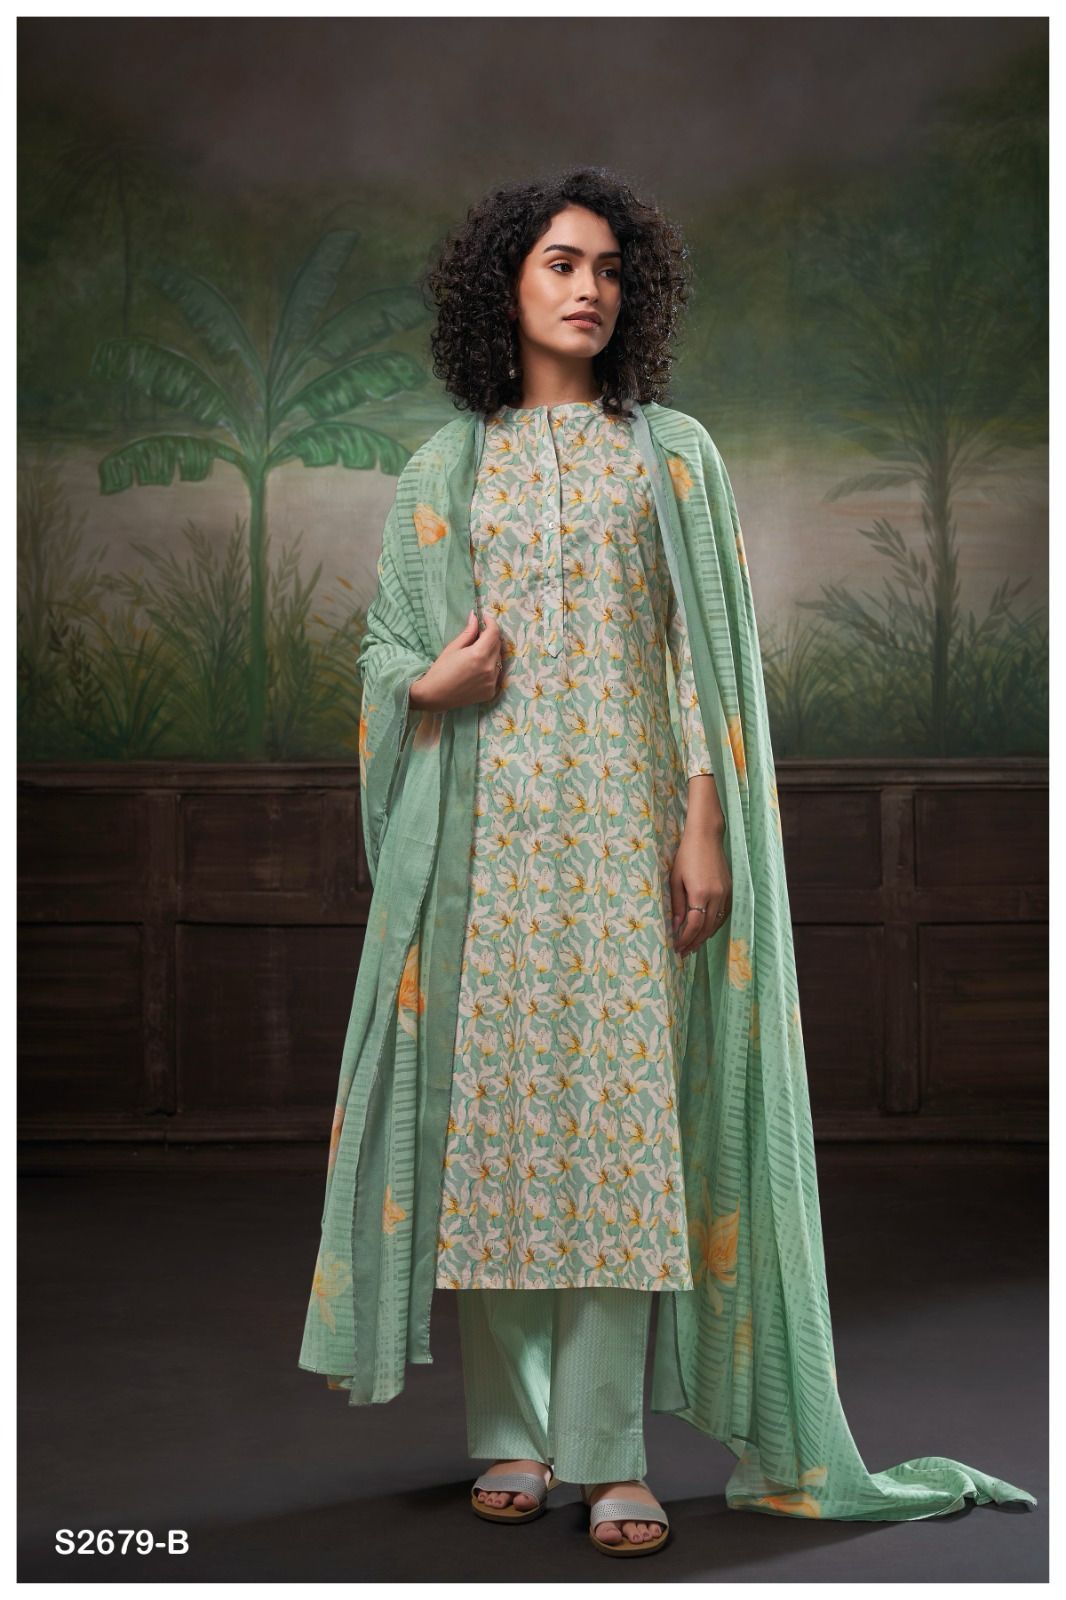 Diti 2679 Ganga Premium Cotton Plazzo Style Suits Wholesale Rate